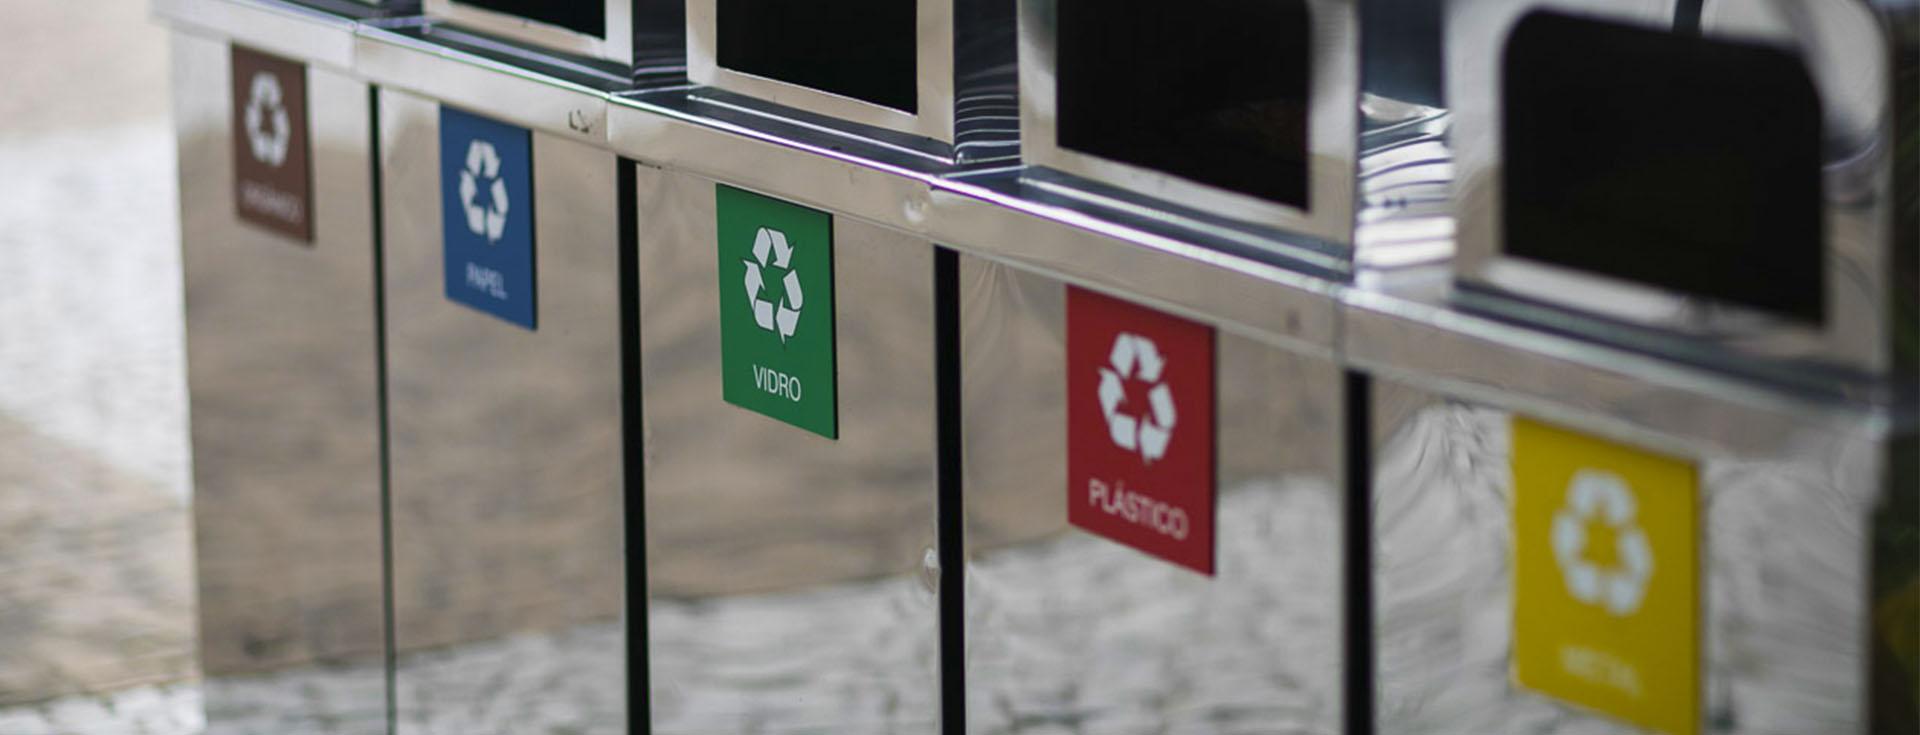 Cinco lixeiras recicláveis separadas por cores